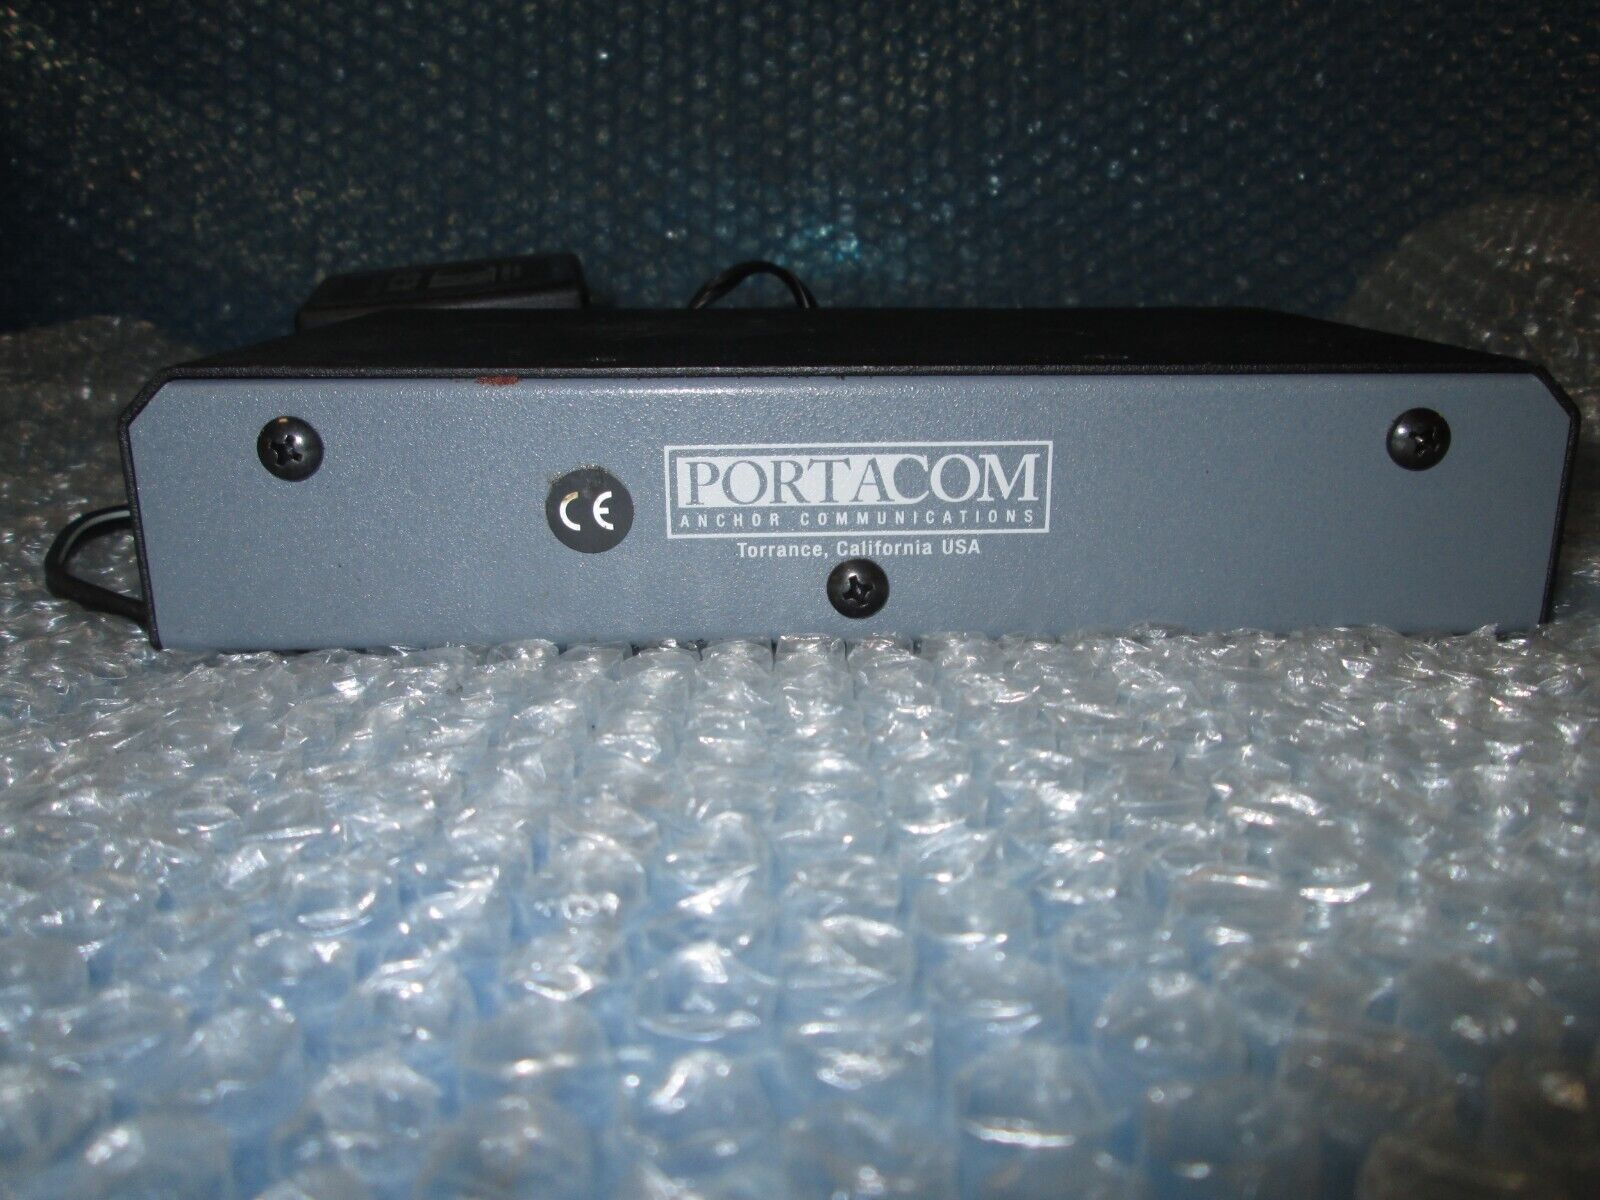 Portacom PC-100 Anchor Communication Audio Power Console